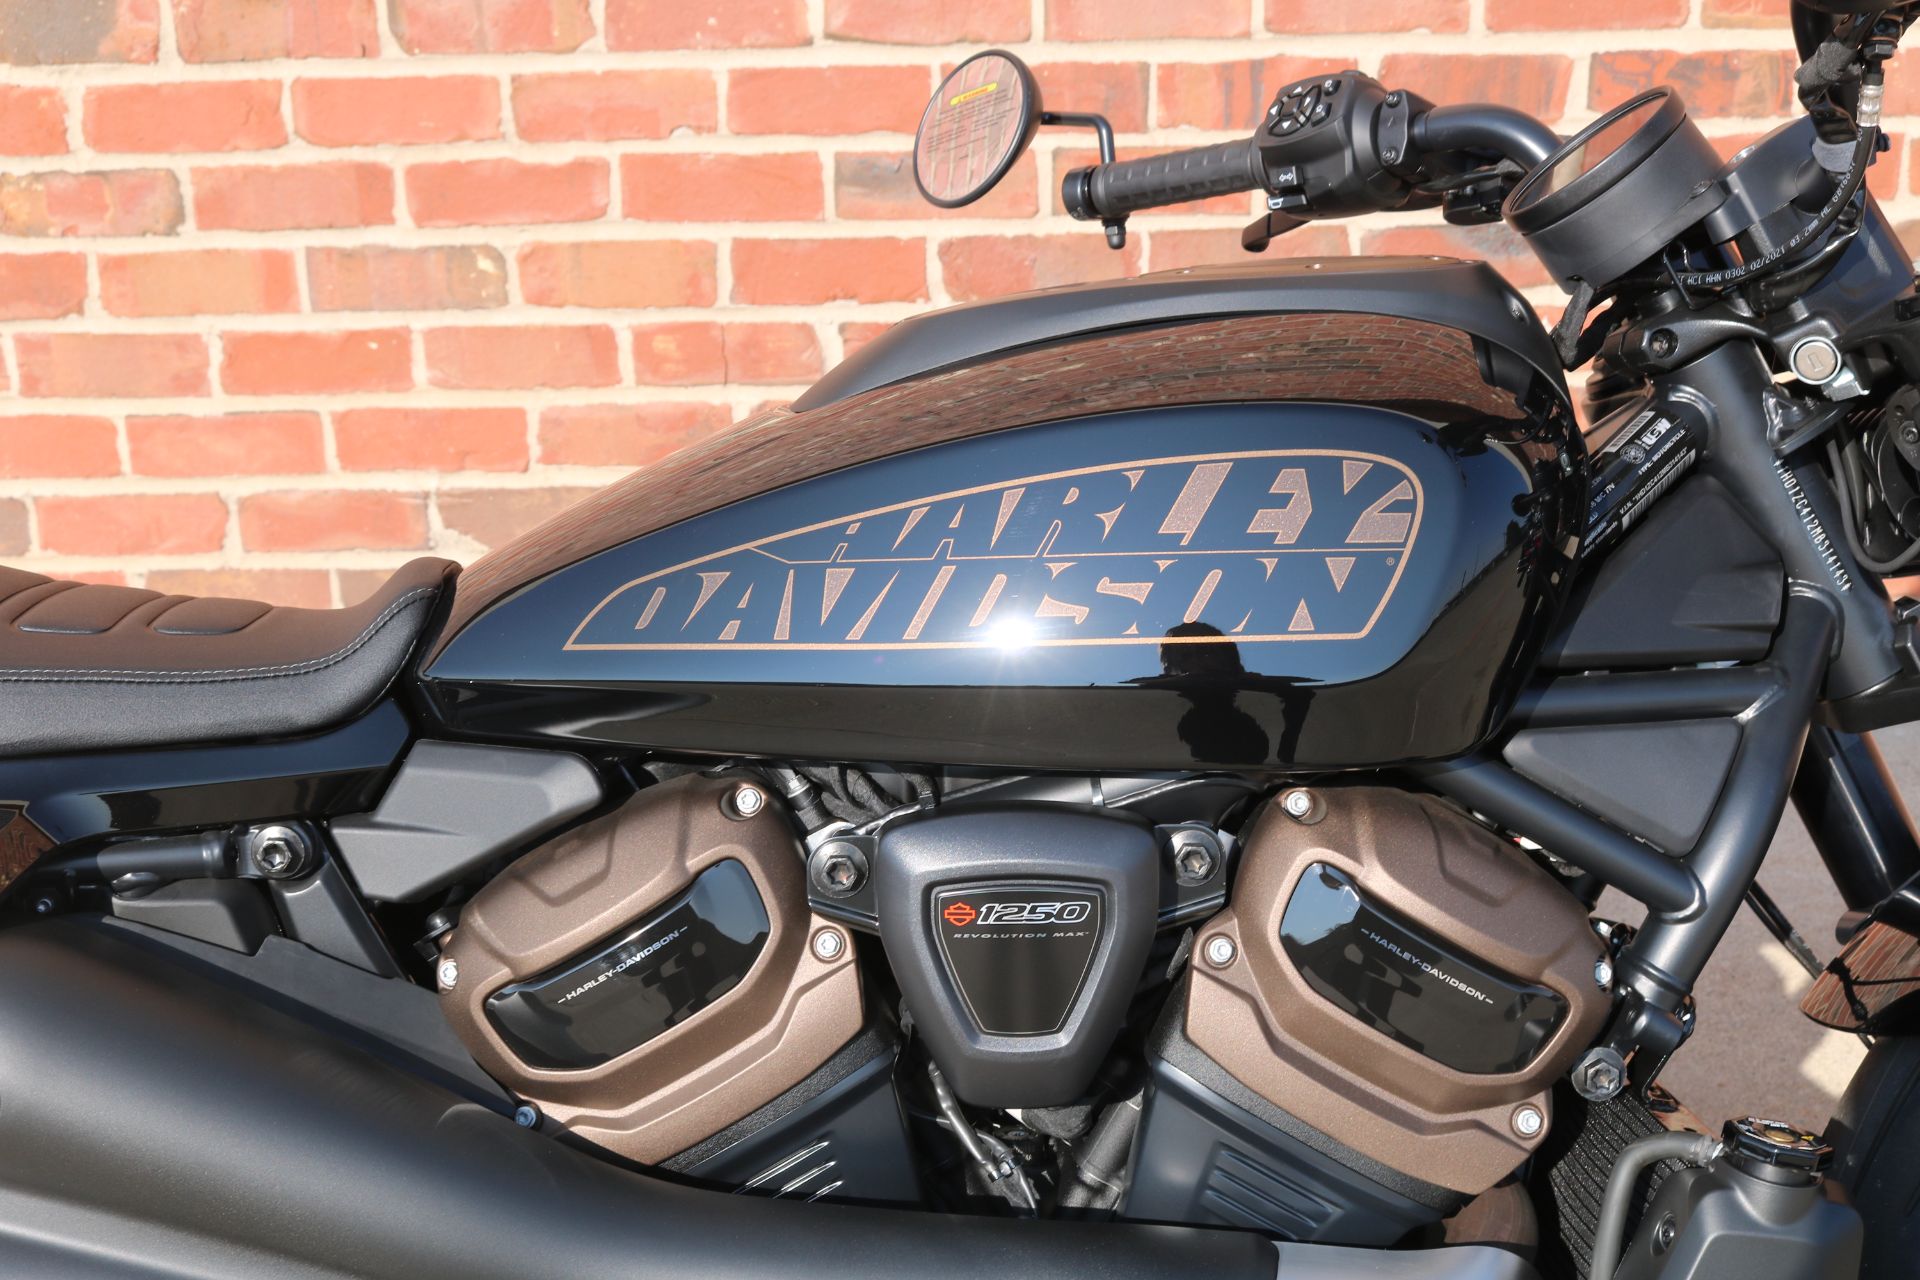 2021 Harley-Davidson Sportster® S in Ames, Iowa - Photo 4